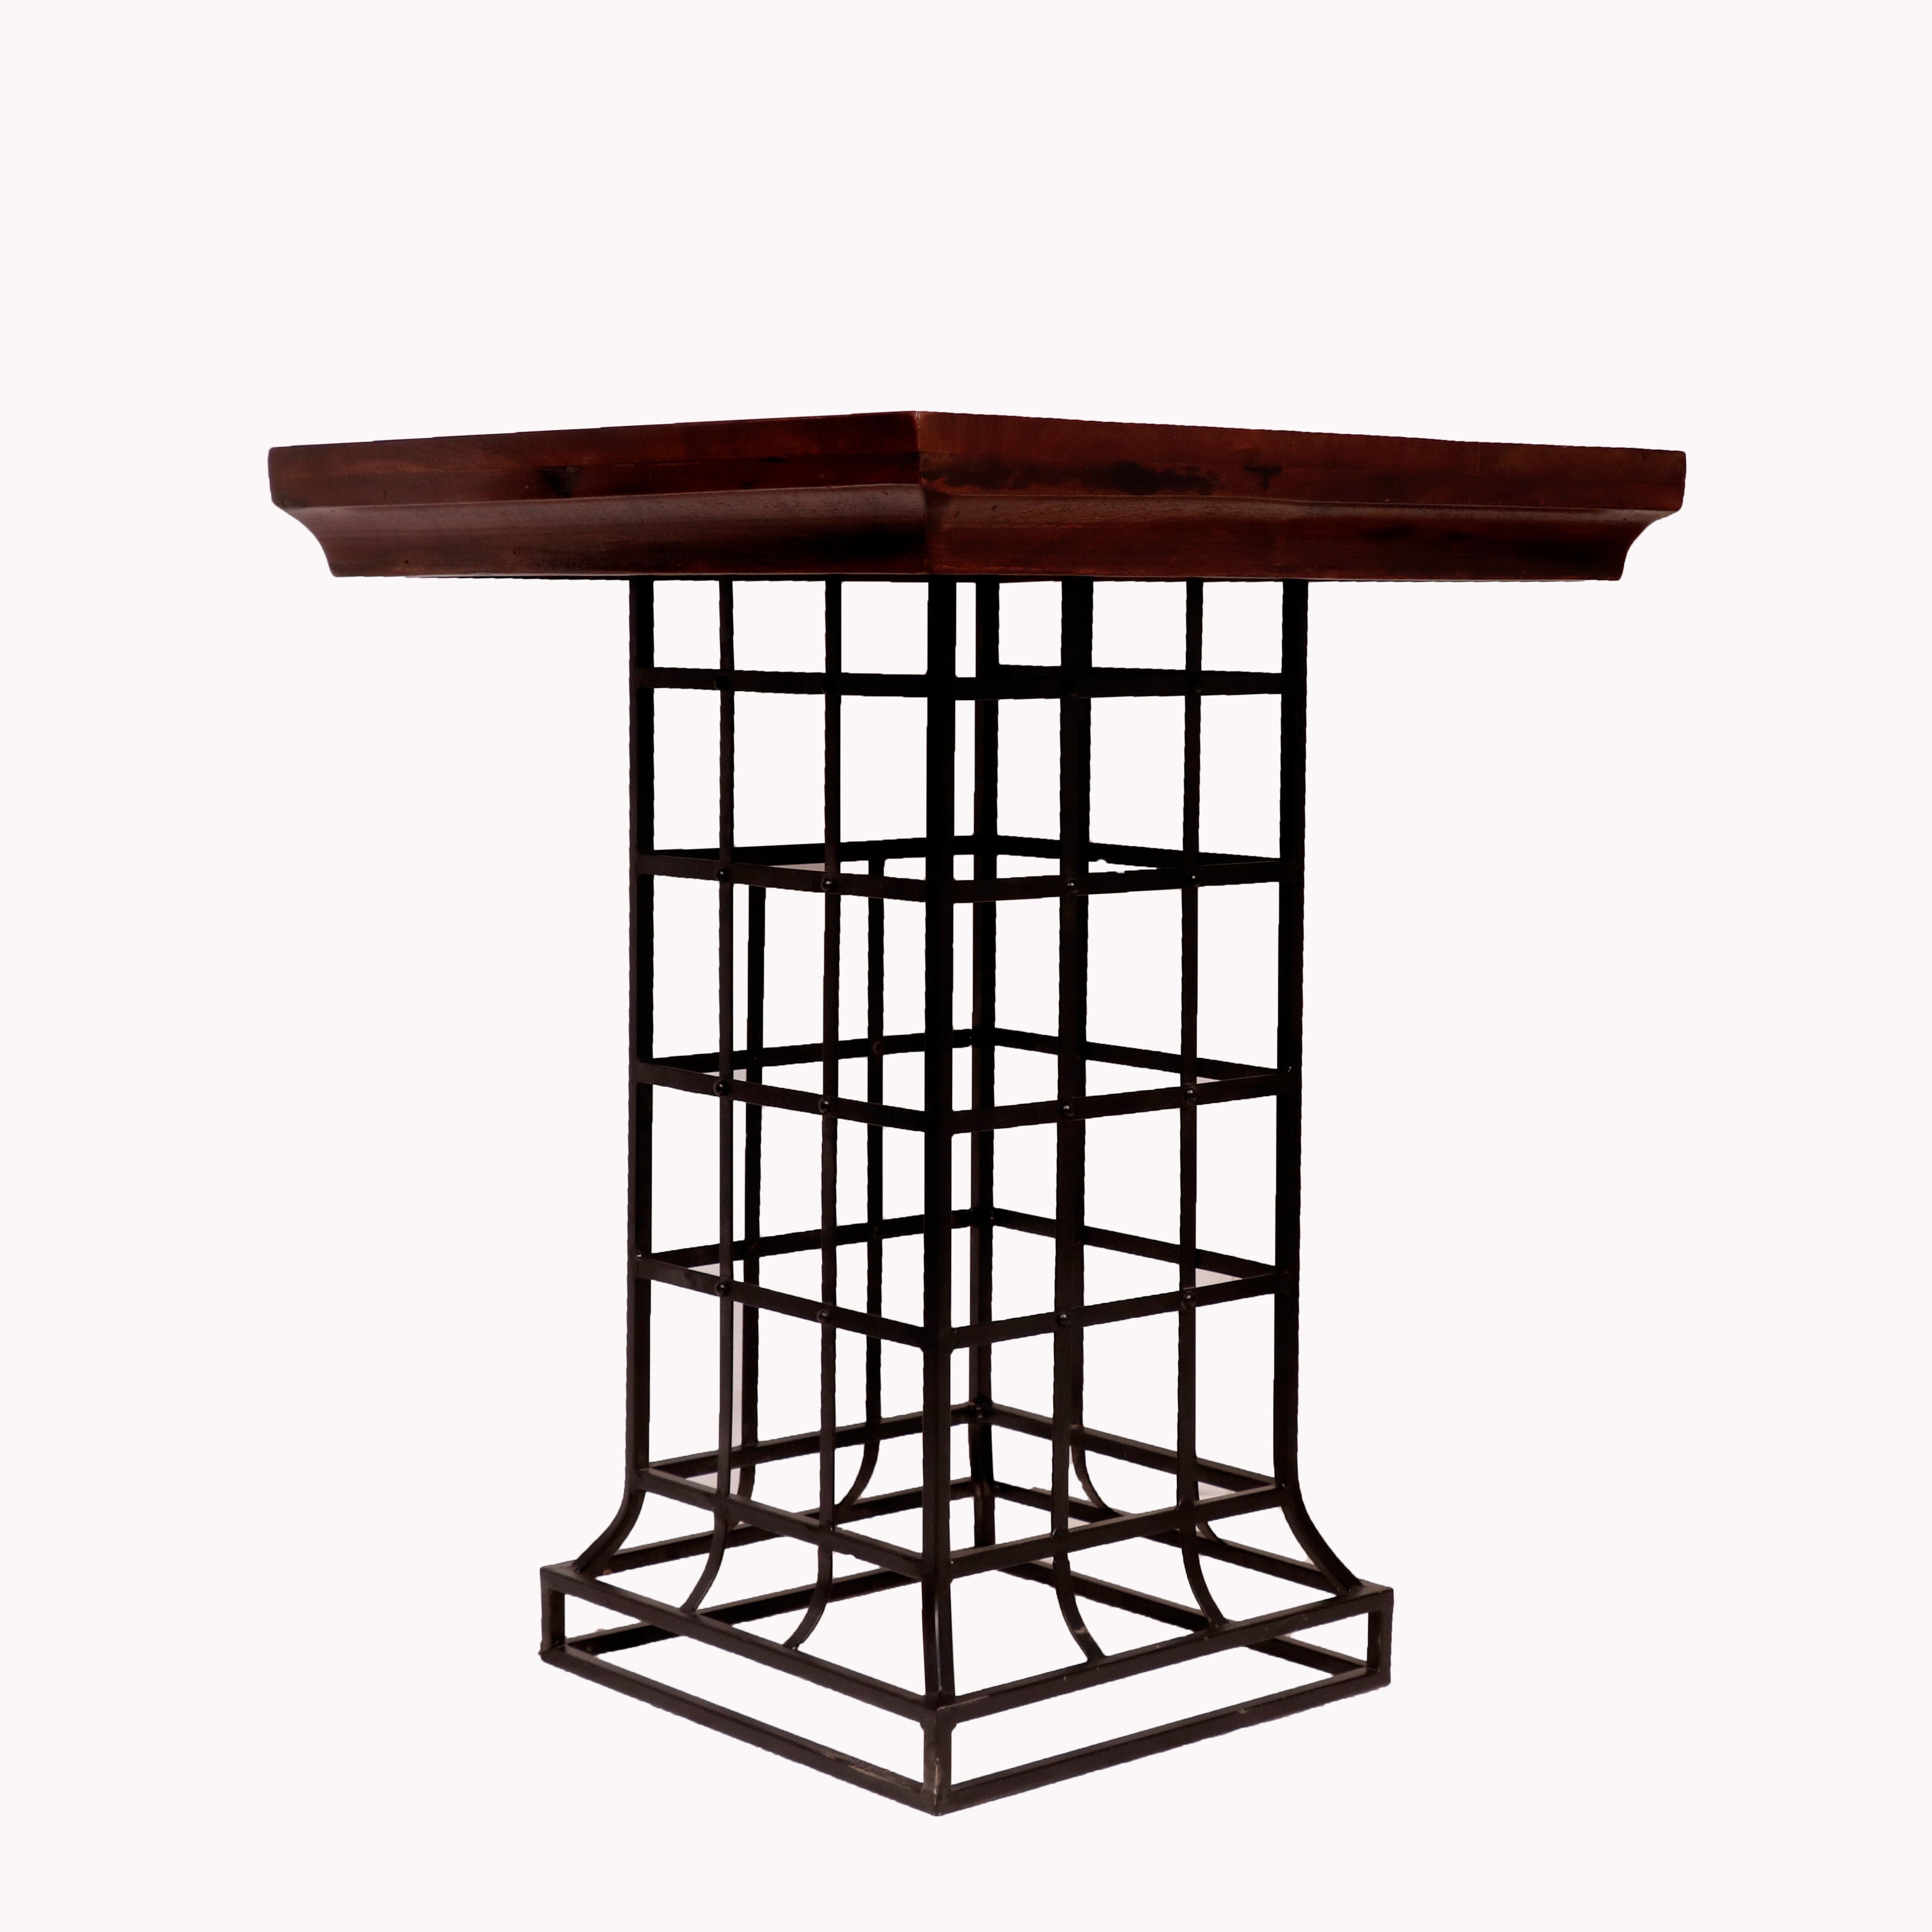 Metal Criss Cross Table Bar Table